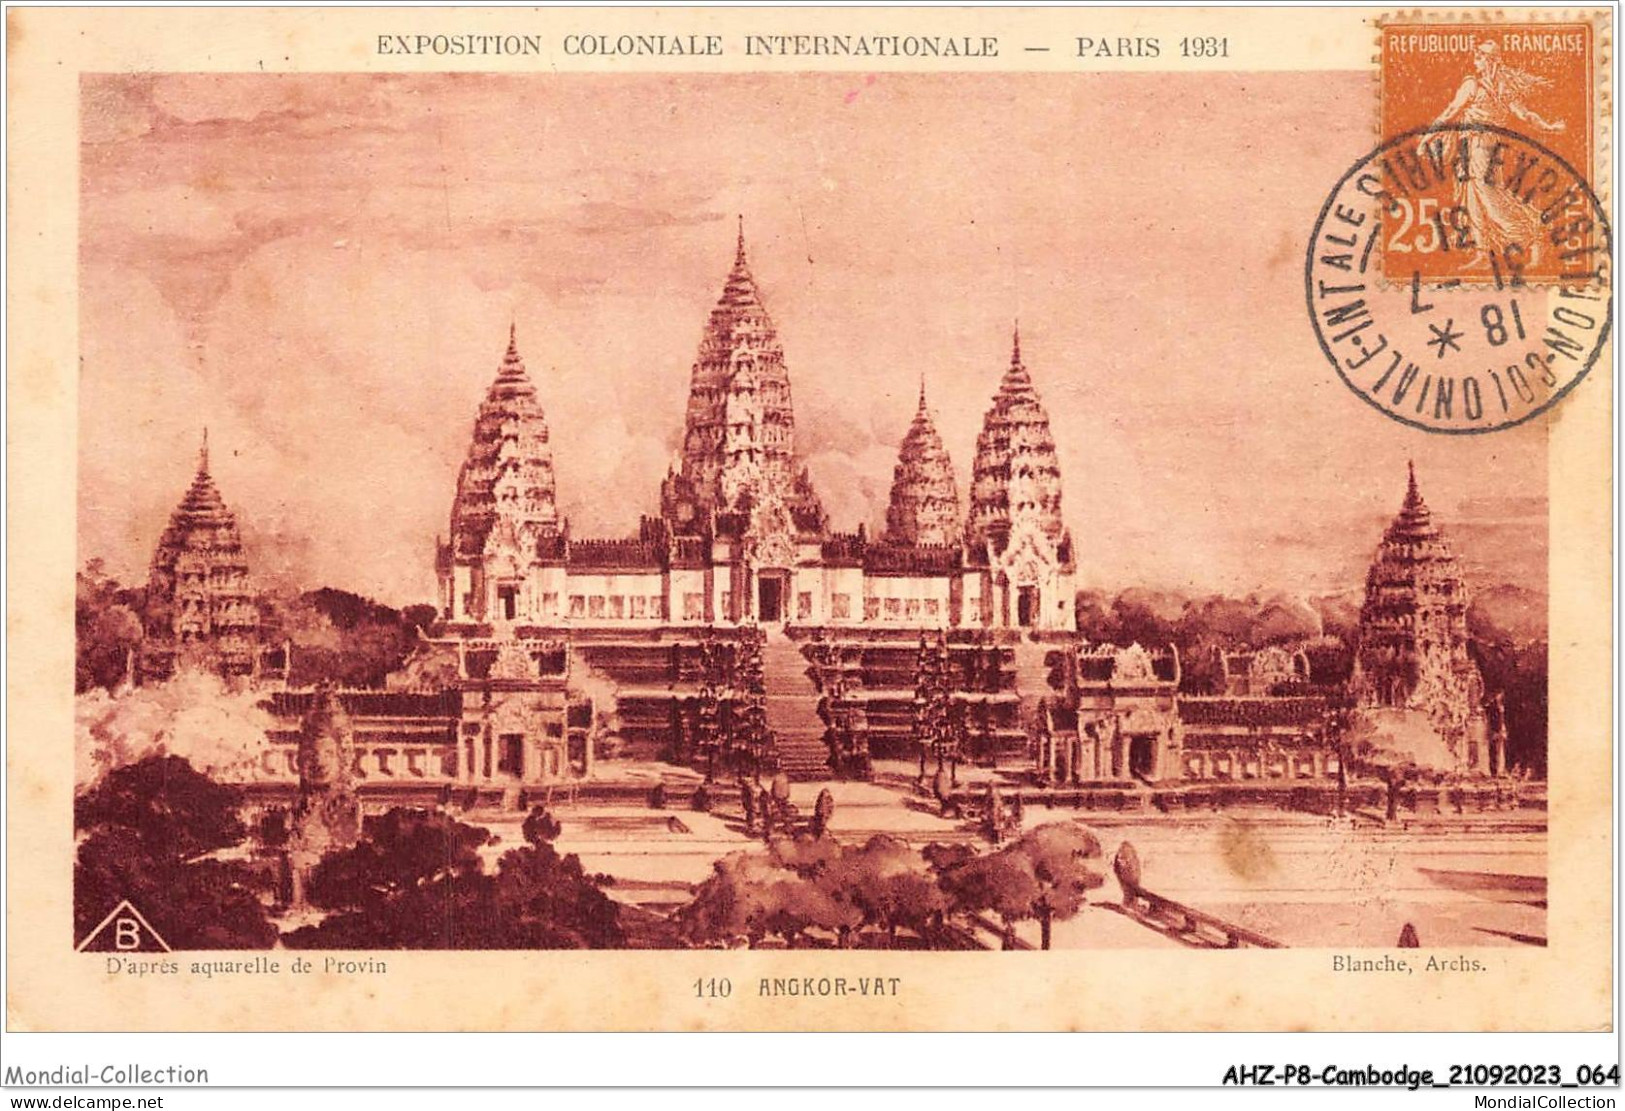 AHZP8-CAMBODGE-0715 - EXPOSITION COLONIALE INTERNATIONALE - PARIS 1931 - ANGKOR-VAT - Cambodia